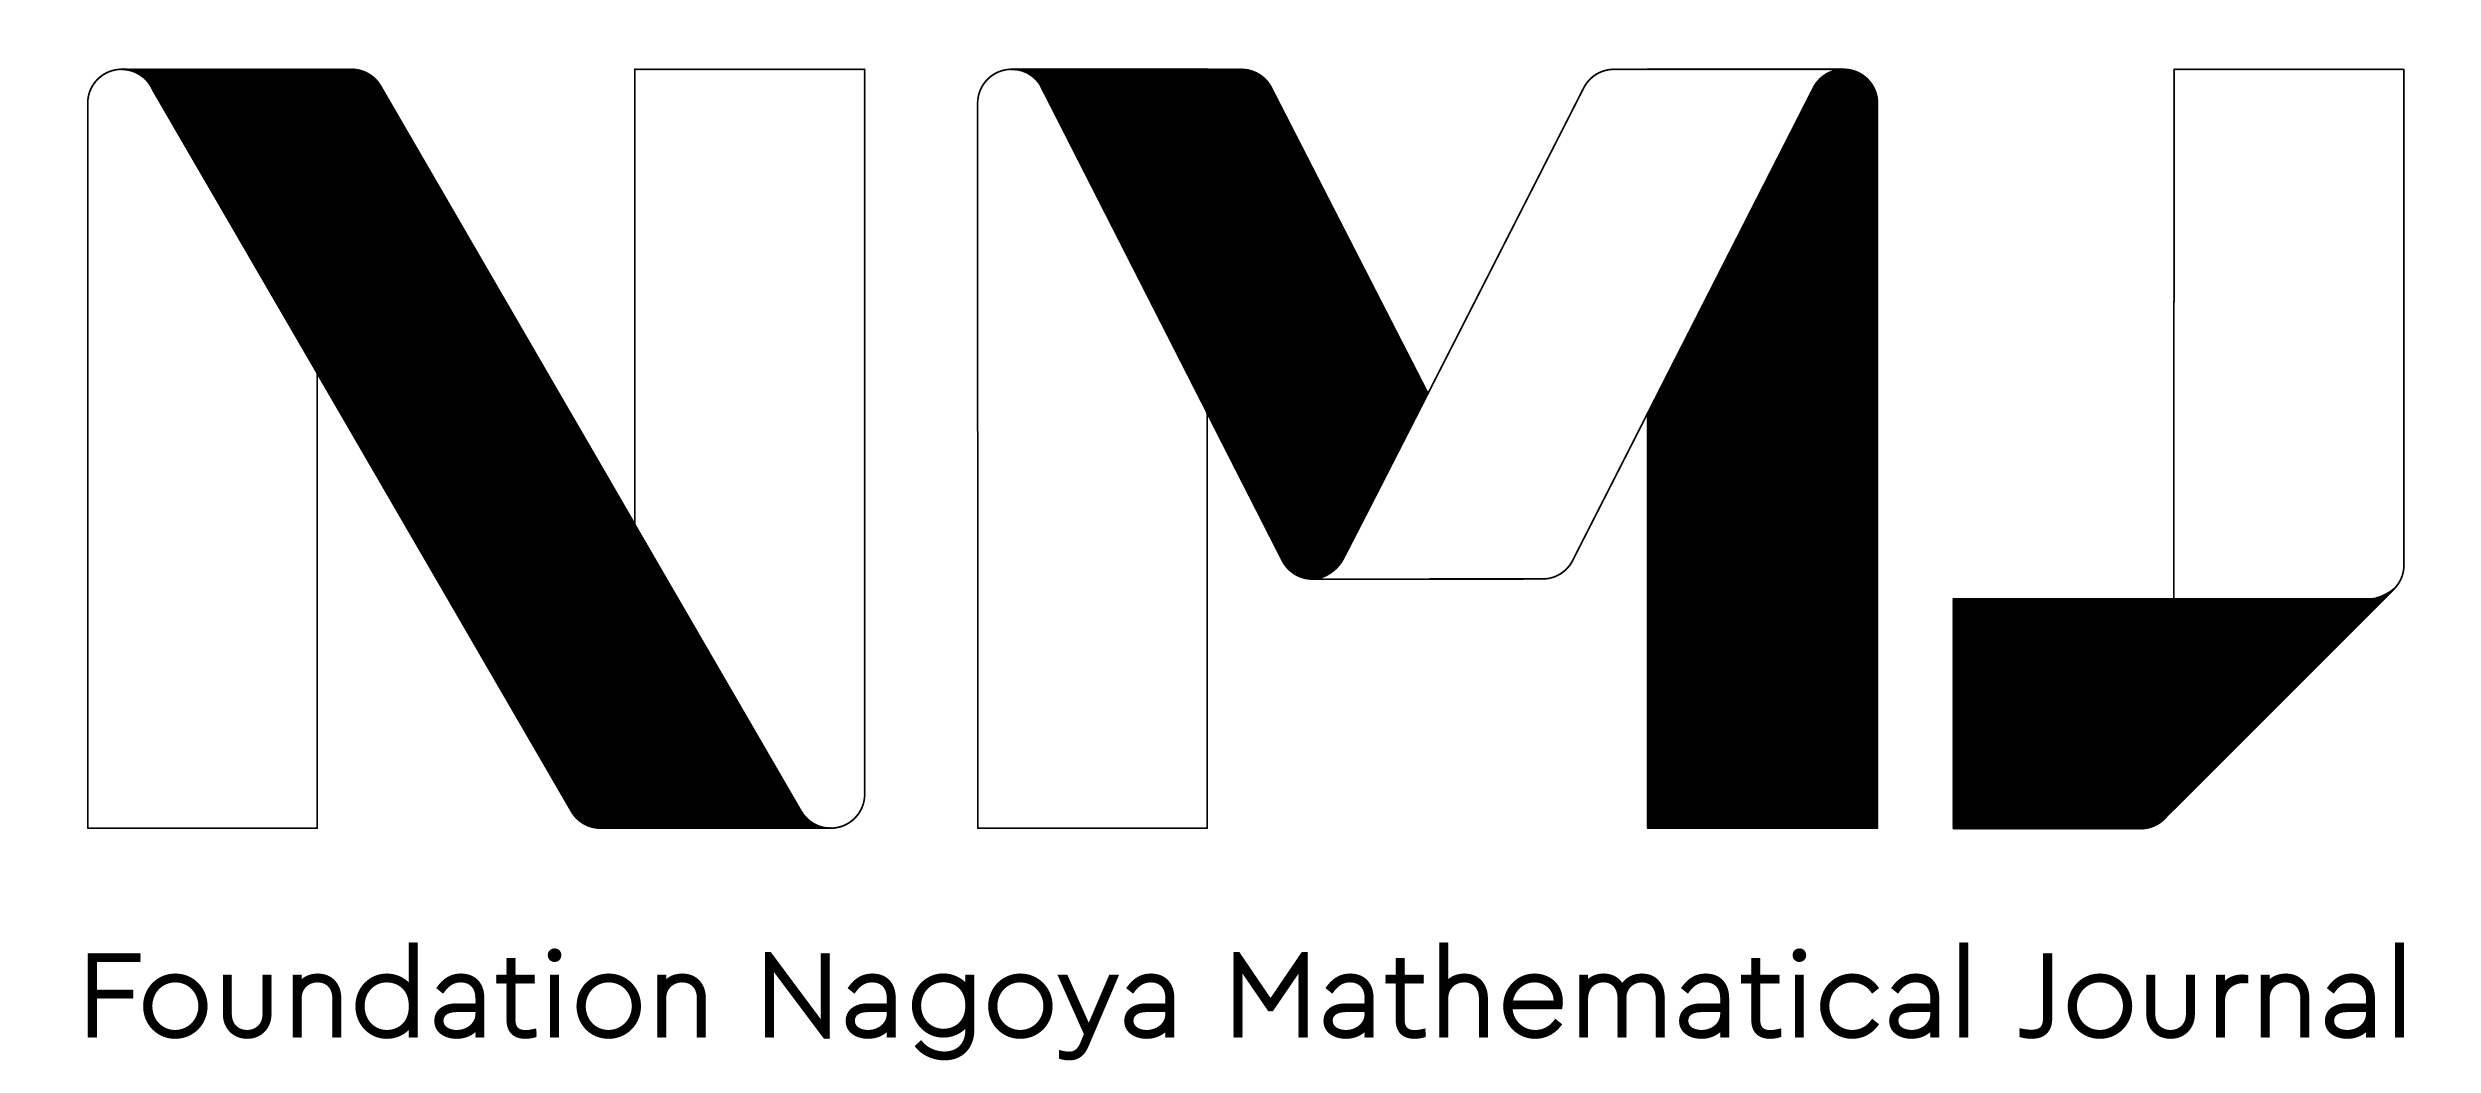 FNMJ logo